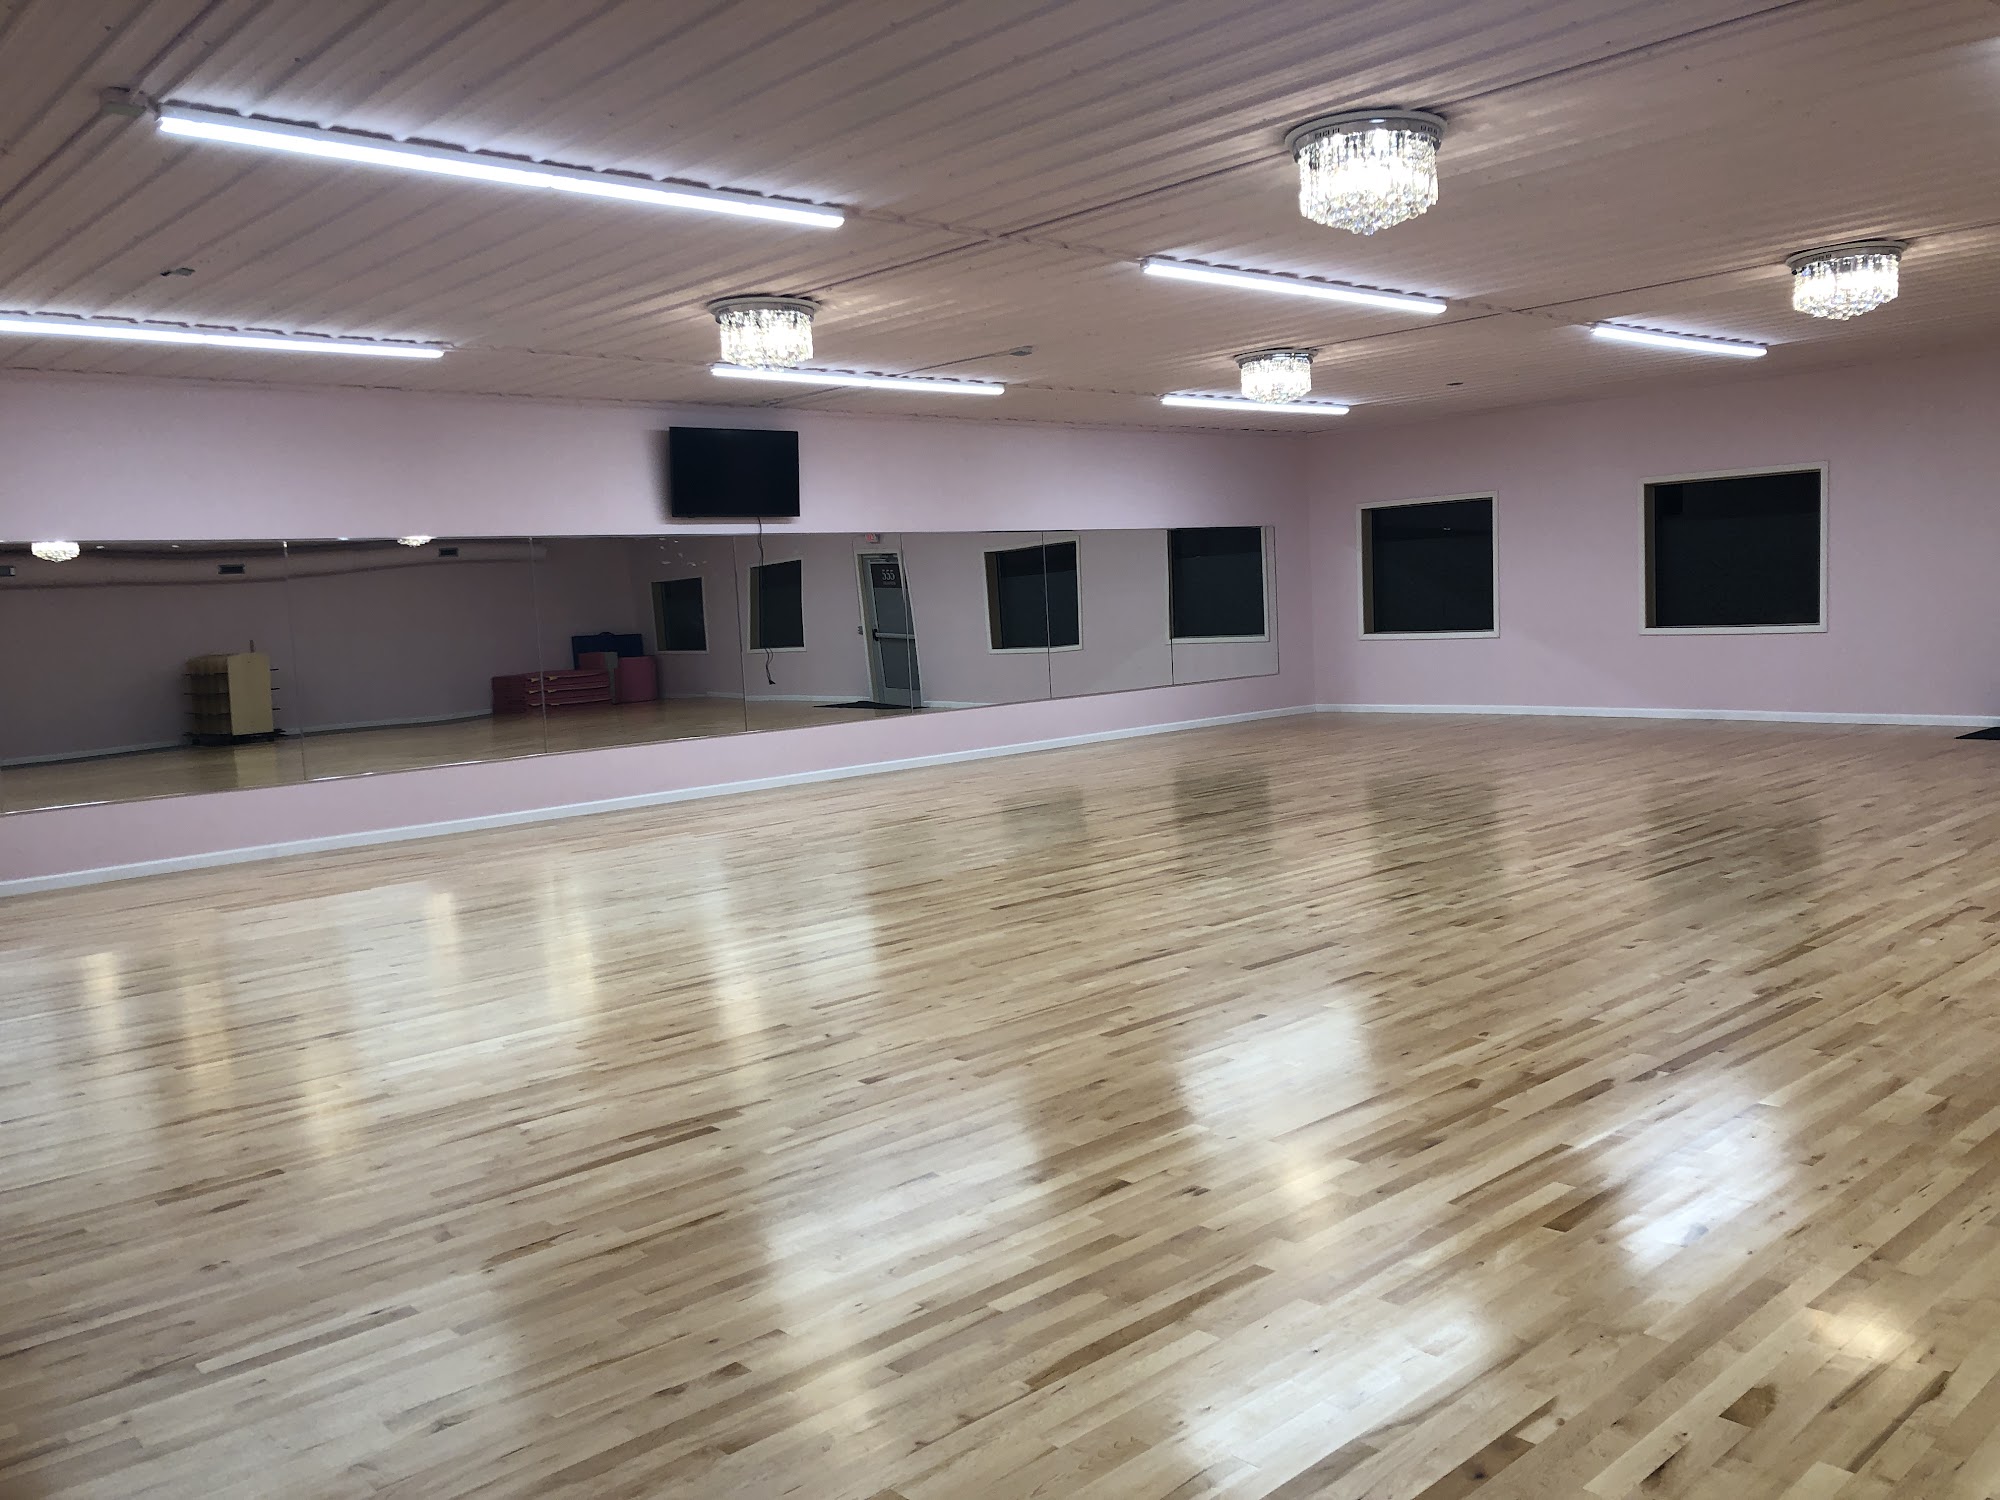 The Dance Academy - Kay Williams Prunty 555 Kragness Ave N, Worthington Minnesota 56187